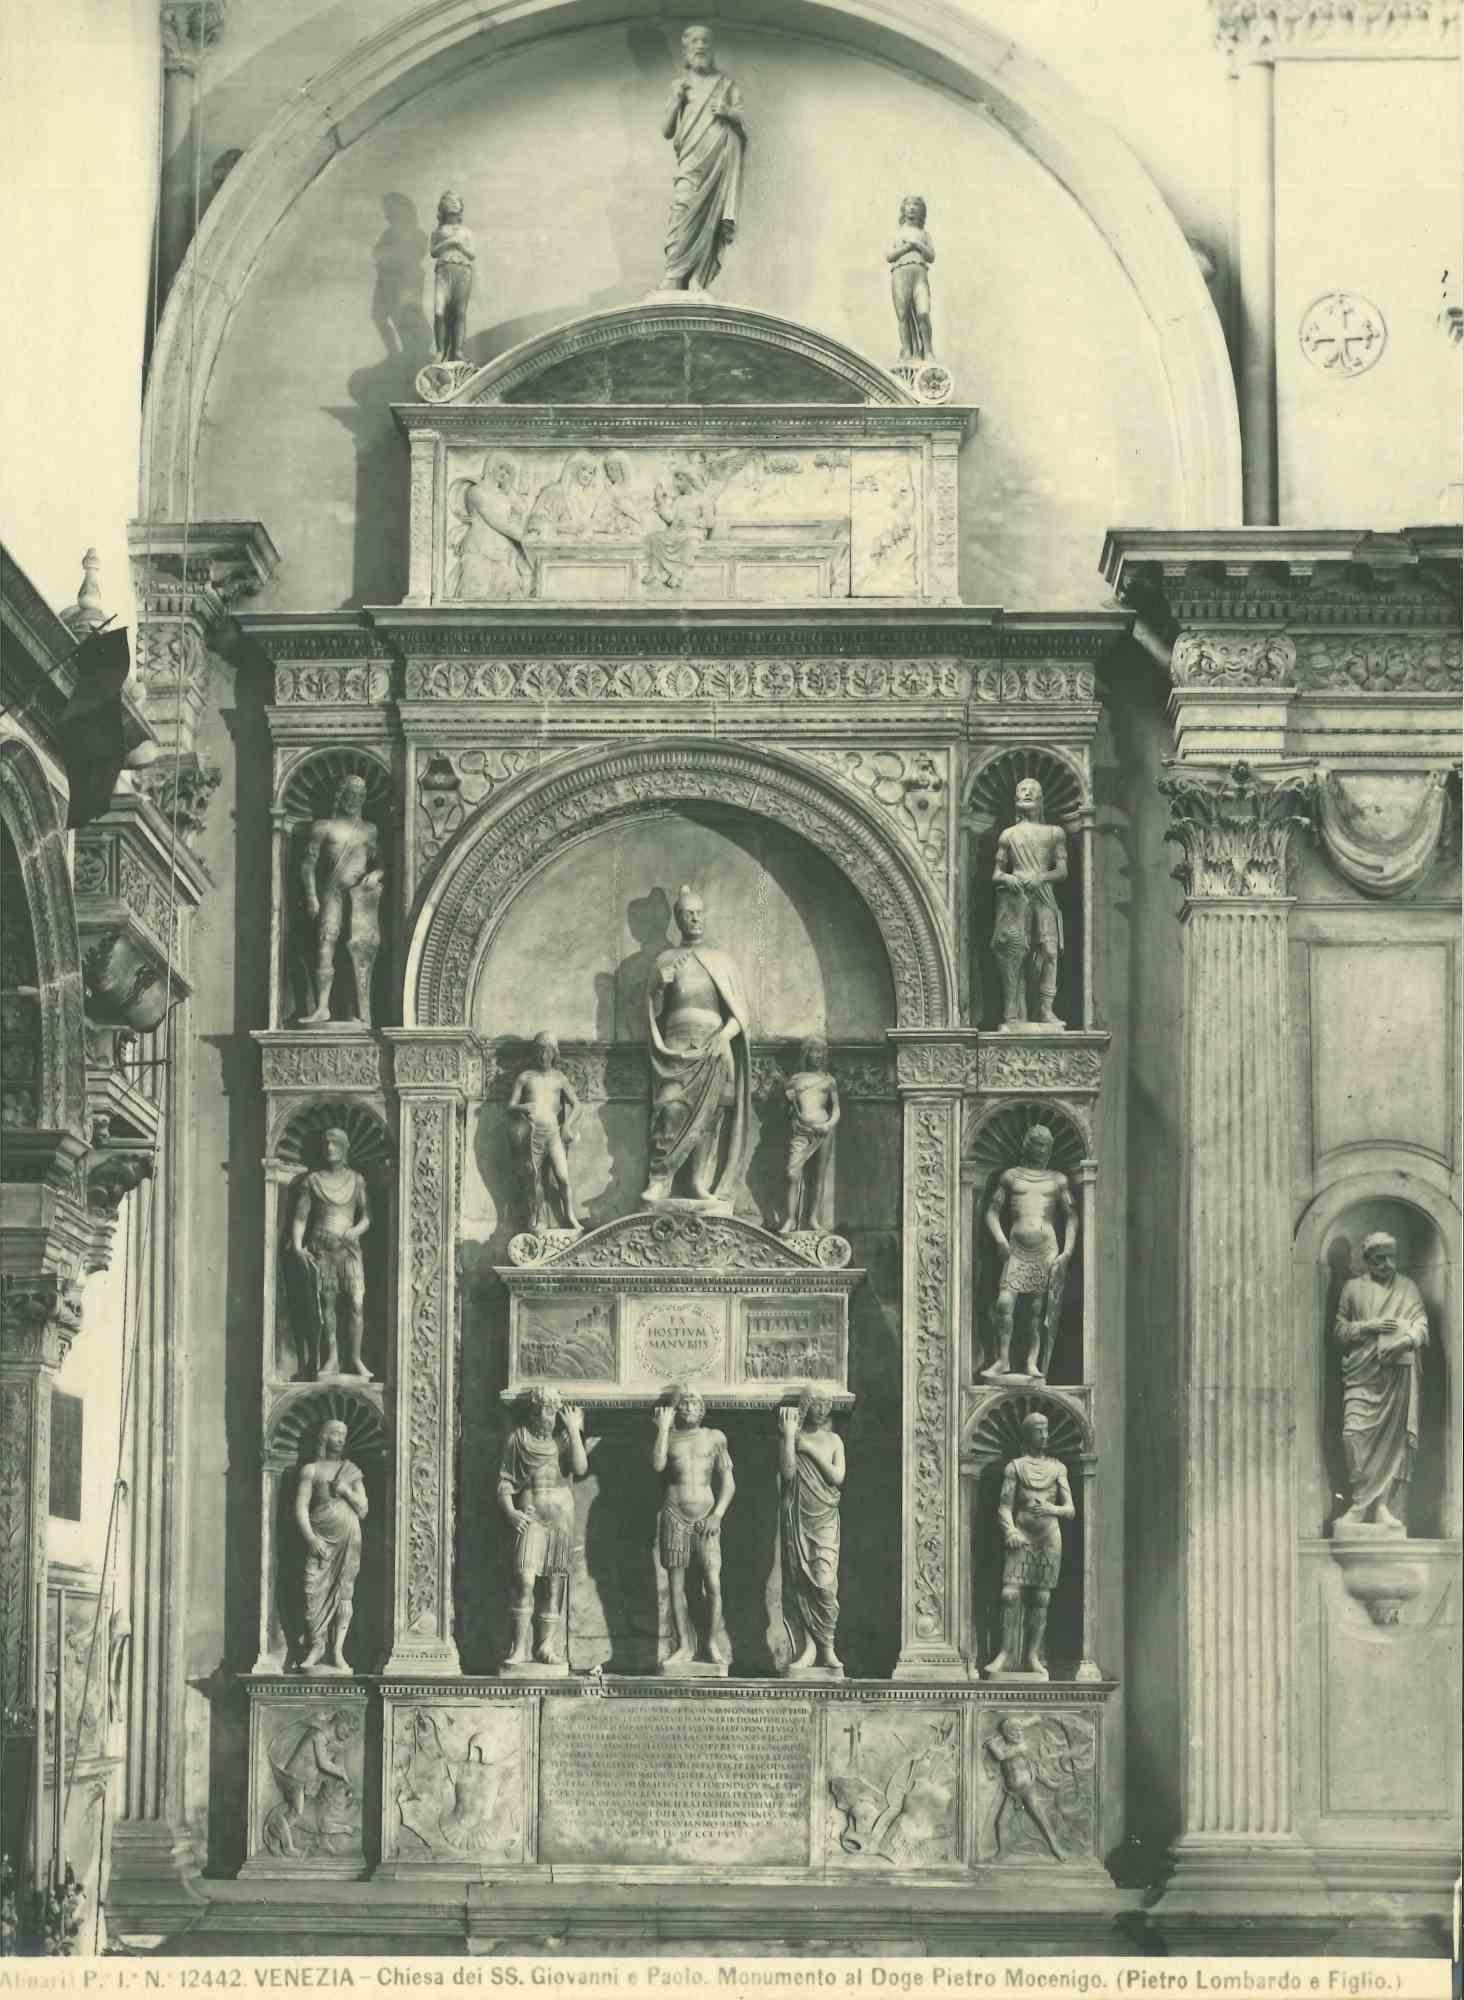 Unknown Portrait Photograph - Architecture and Art Photo - S. Giovanni e Paolo Church - Vintage Photo- 1920s